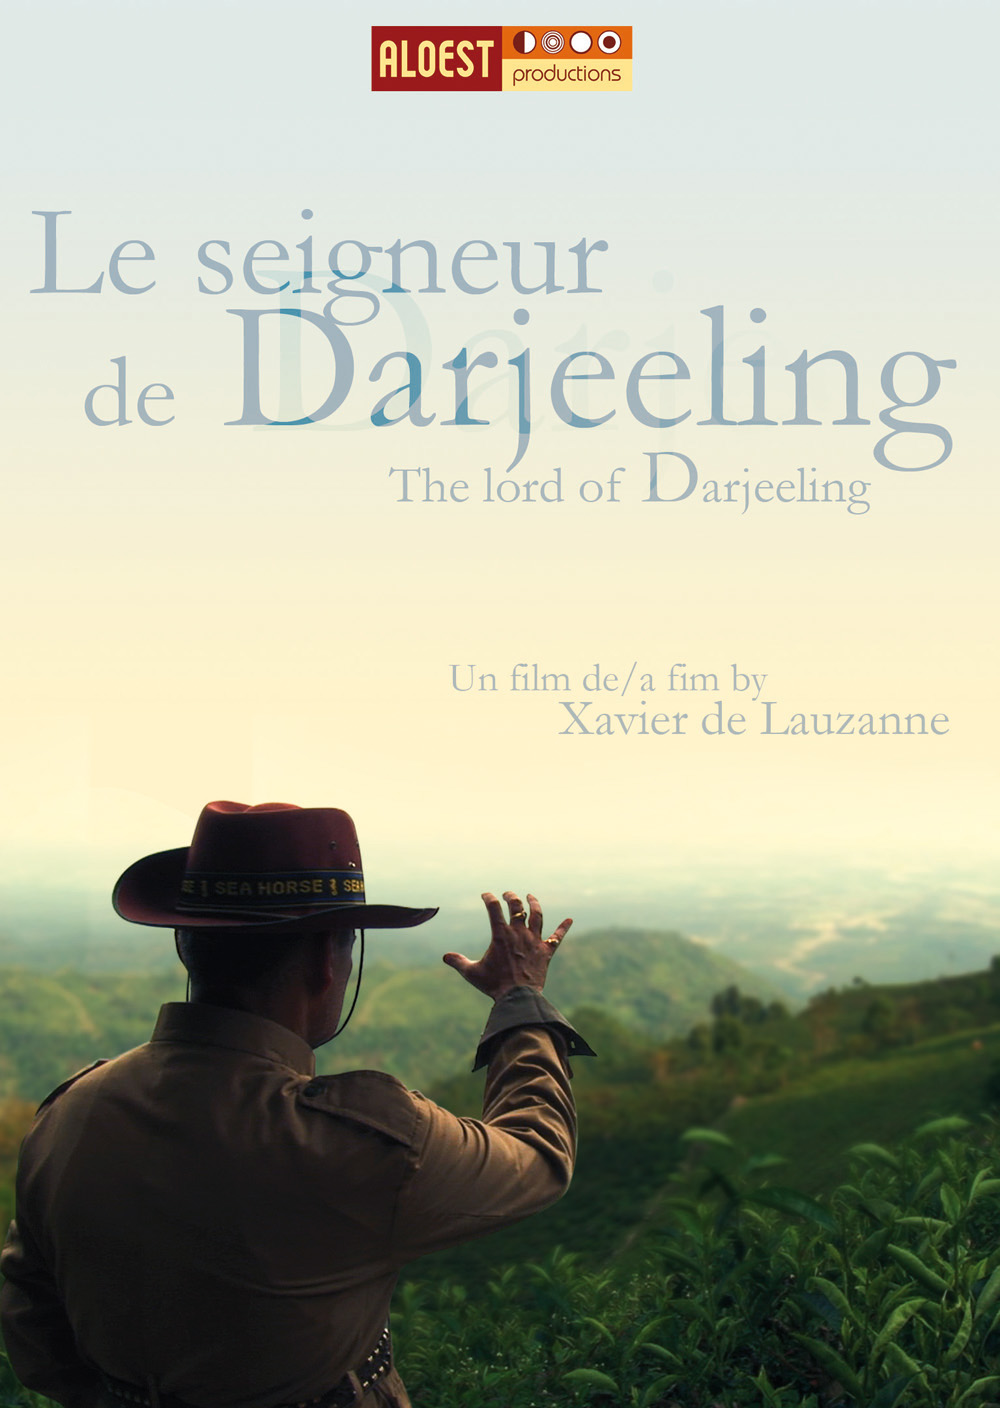 Lord of Darjeeling (Le seigneur de Darjeeling)